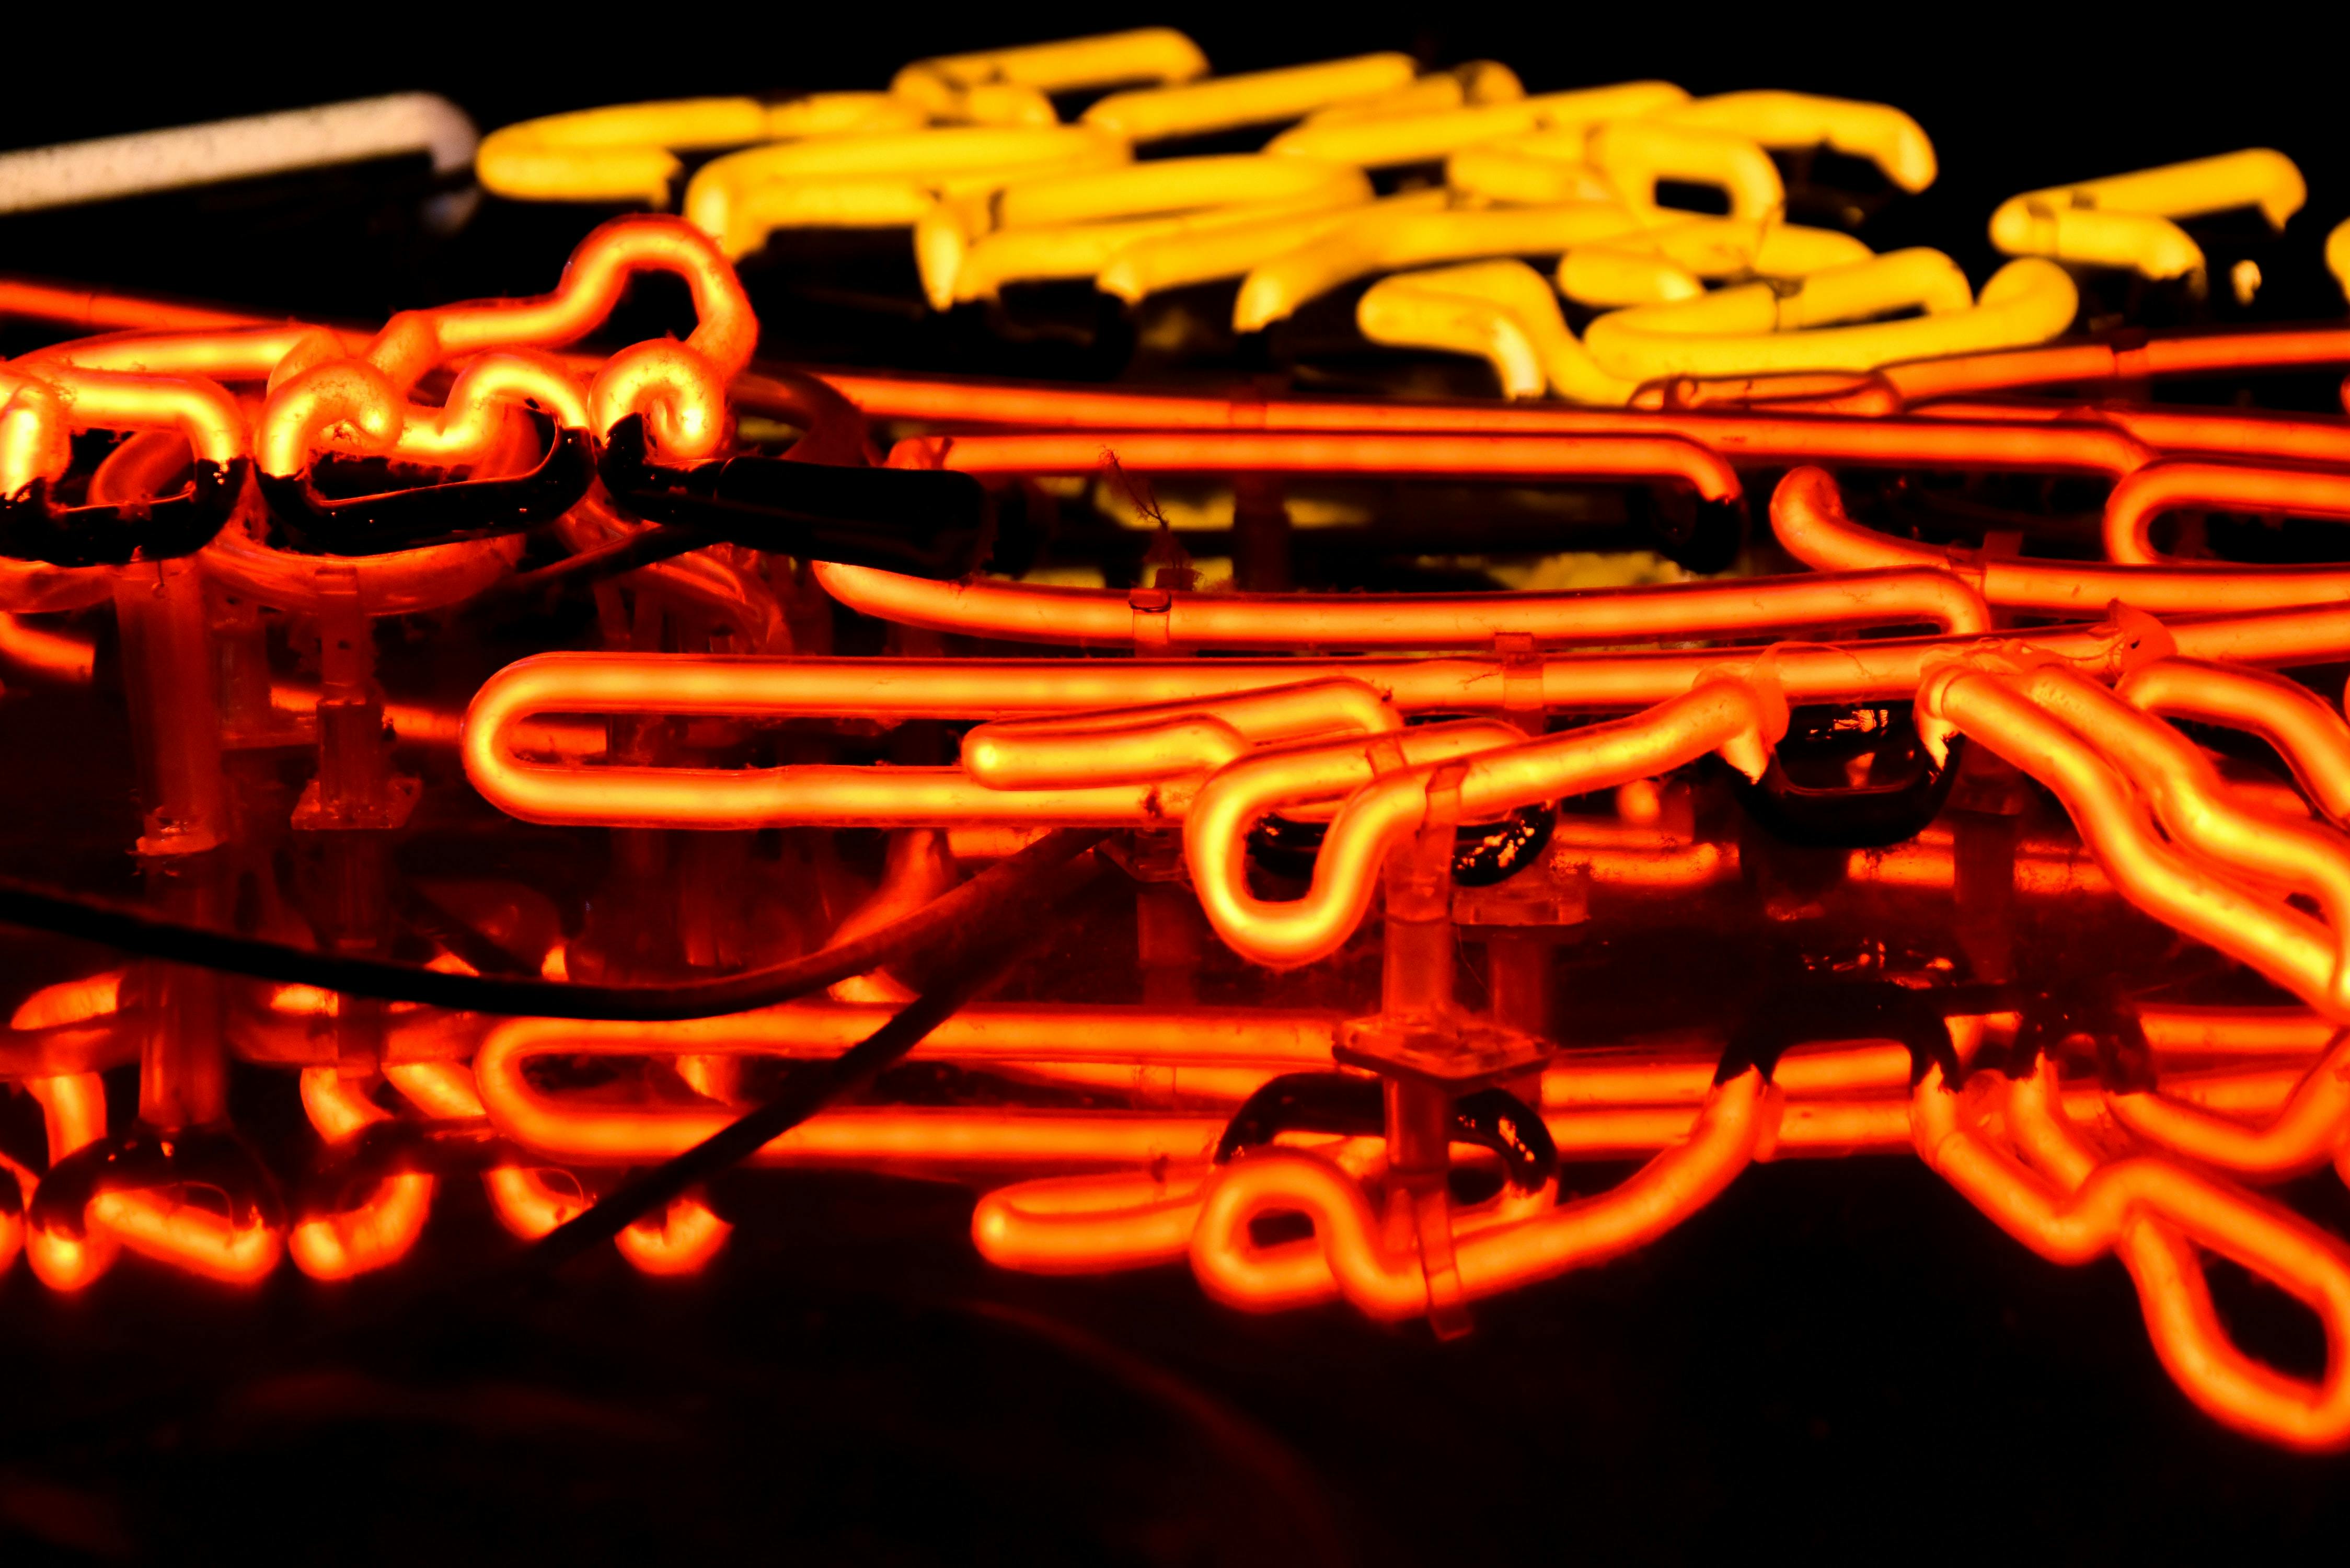 Closeup of orange and yellow neon lights